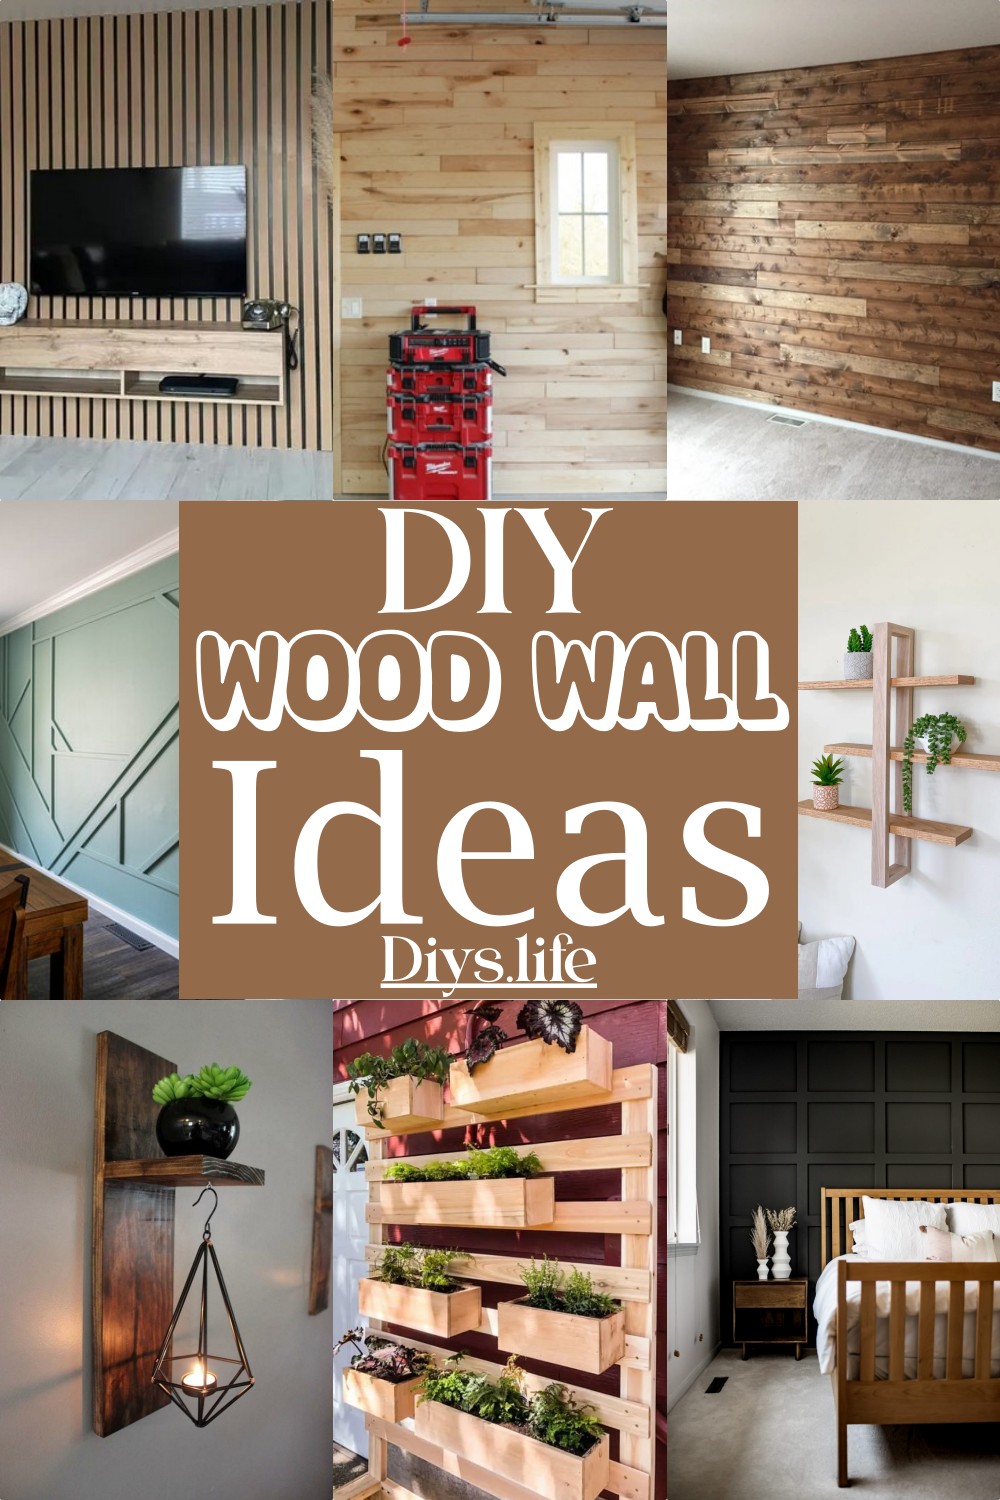 DIY Wood wall Ideas